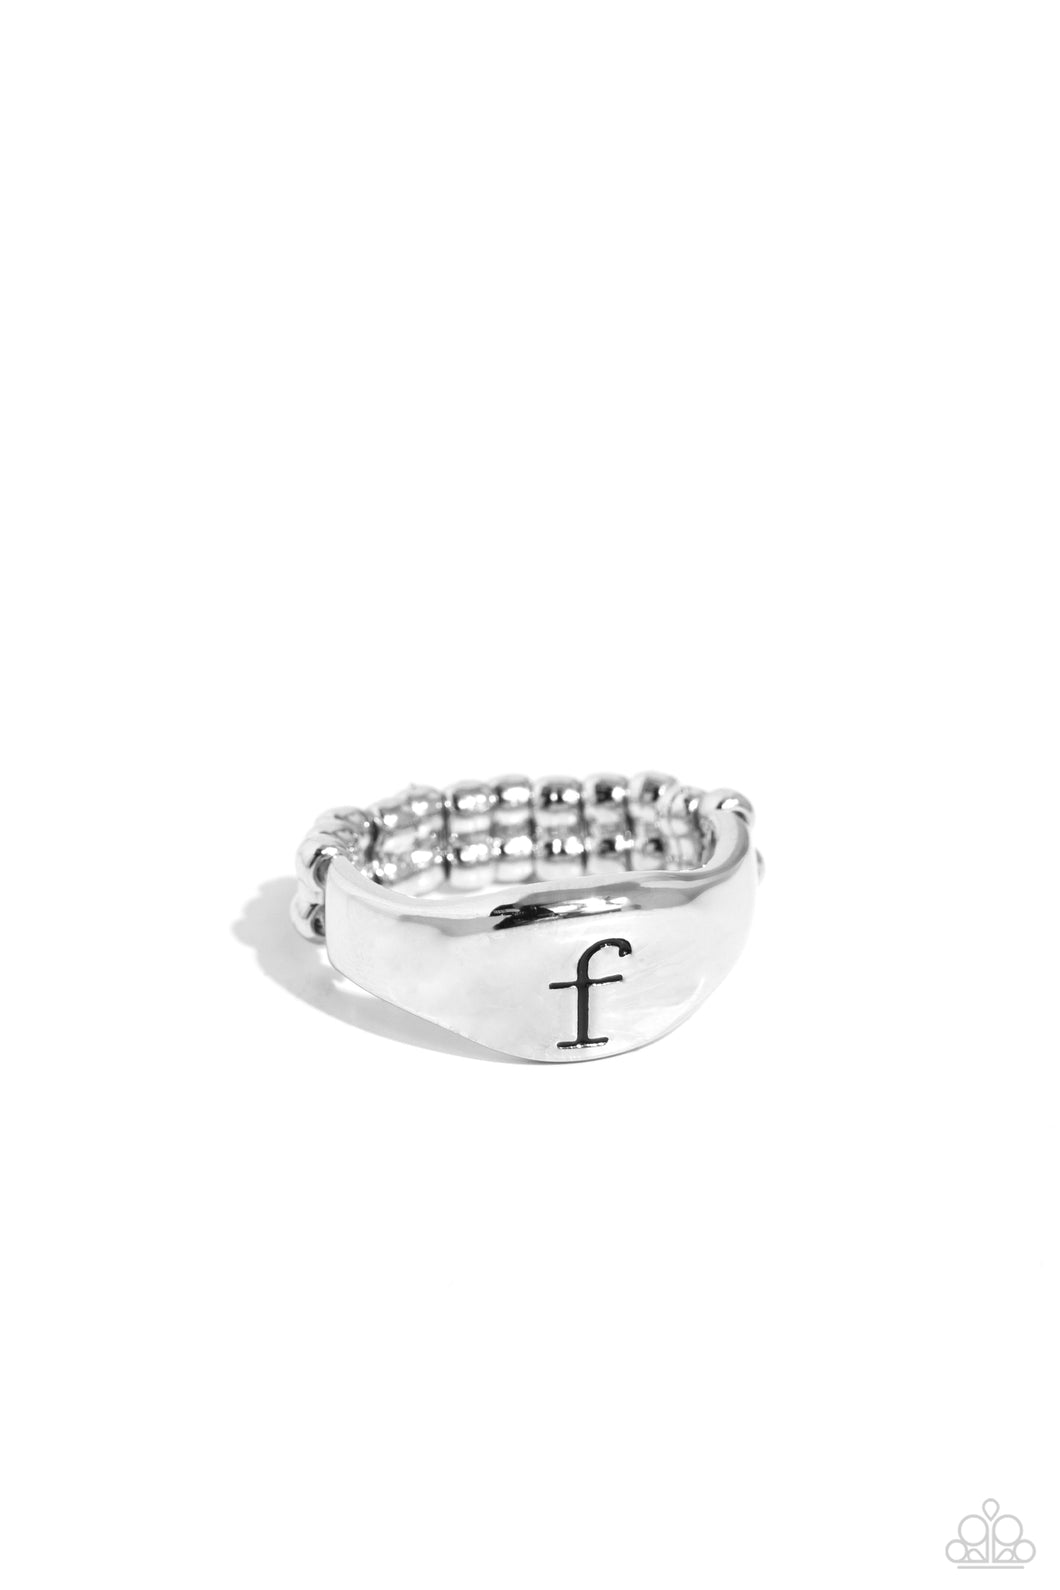 Monogram Memento - Silver - F Initial Ring